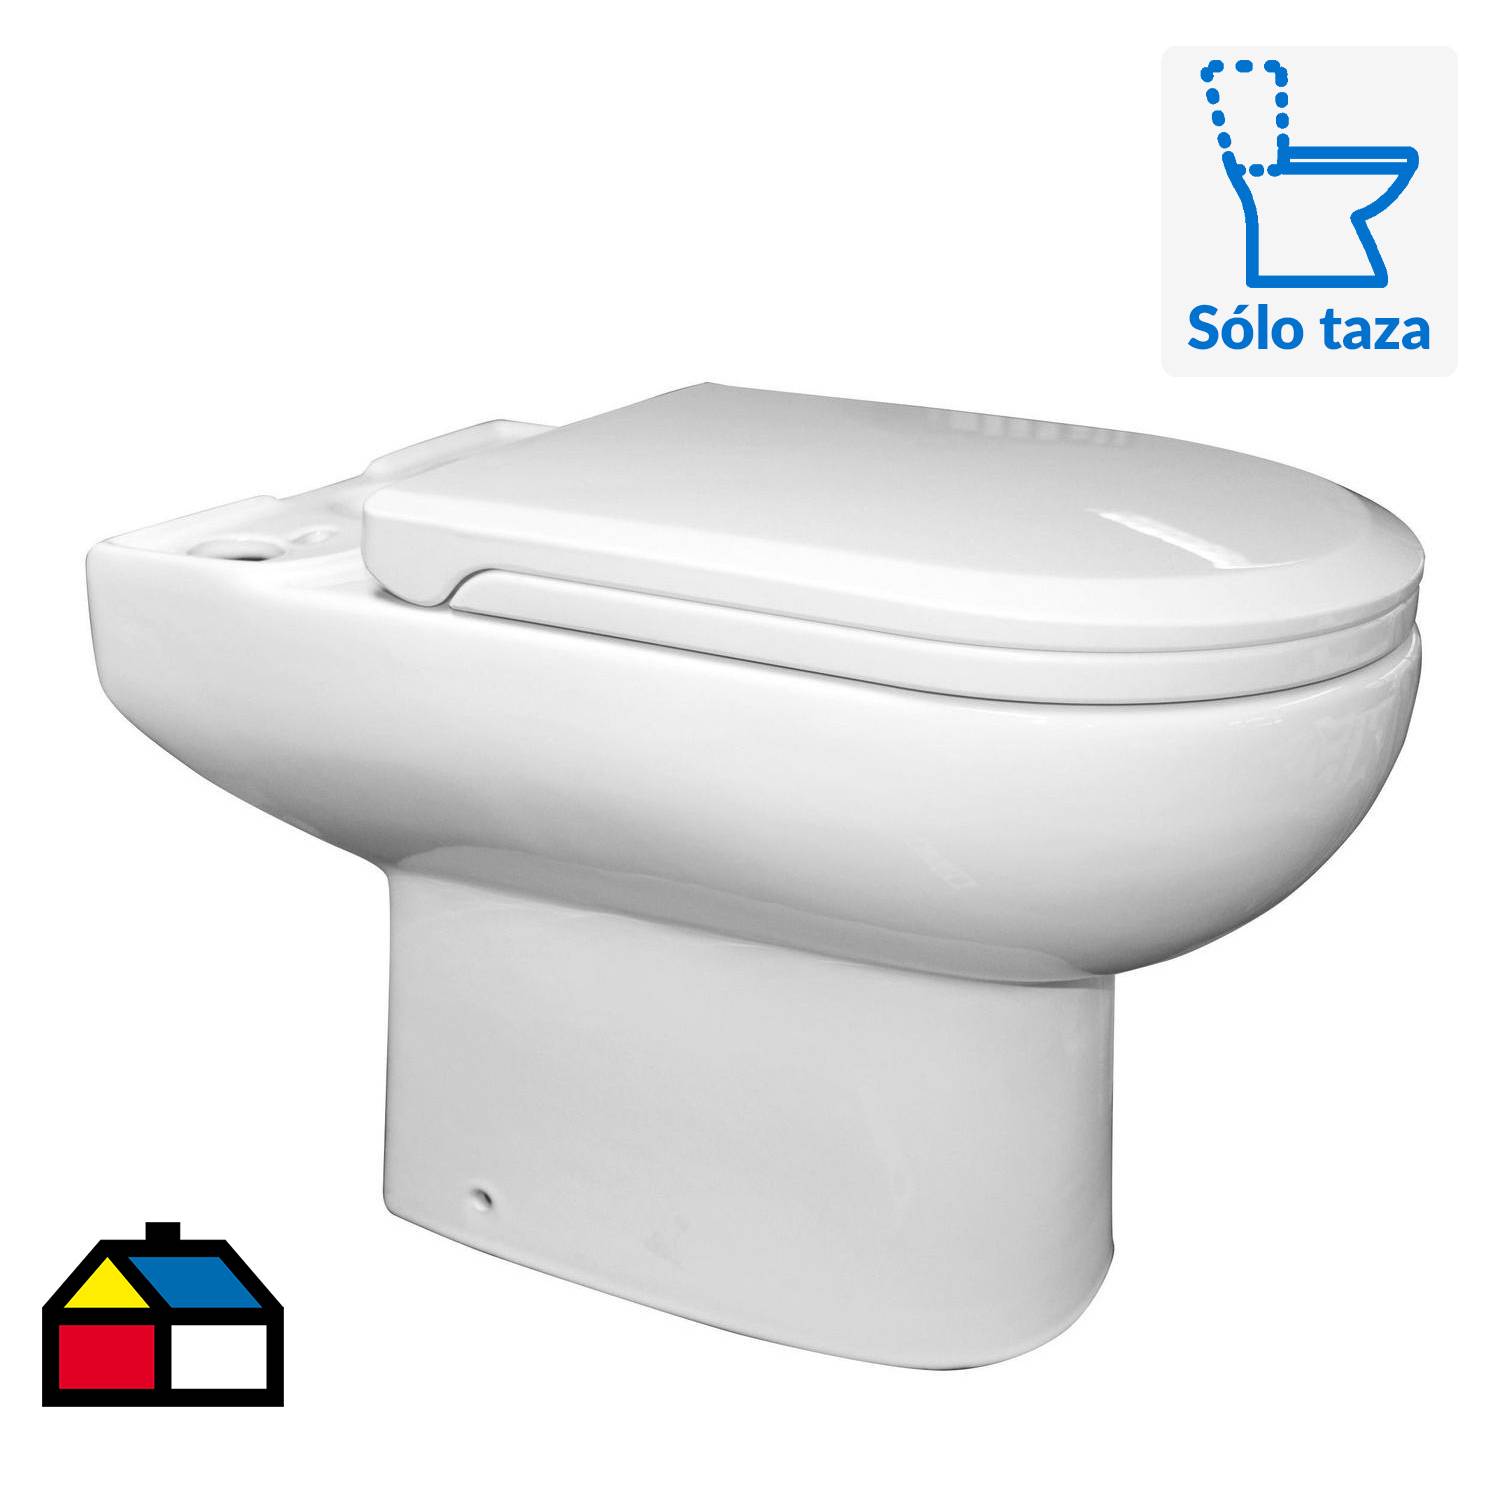 Taza WC Ares  Taza, Baño sanitario, Muros